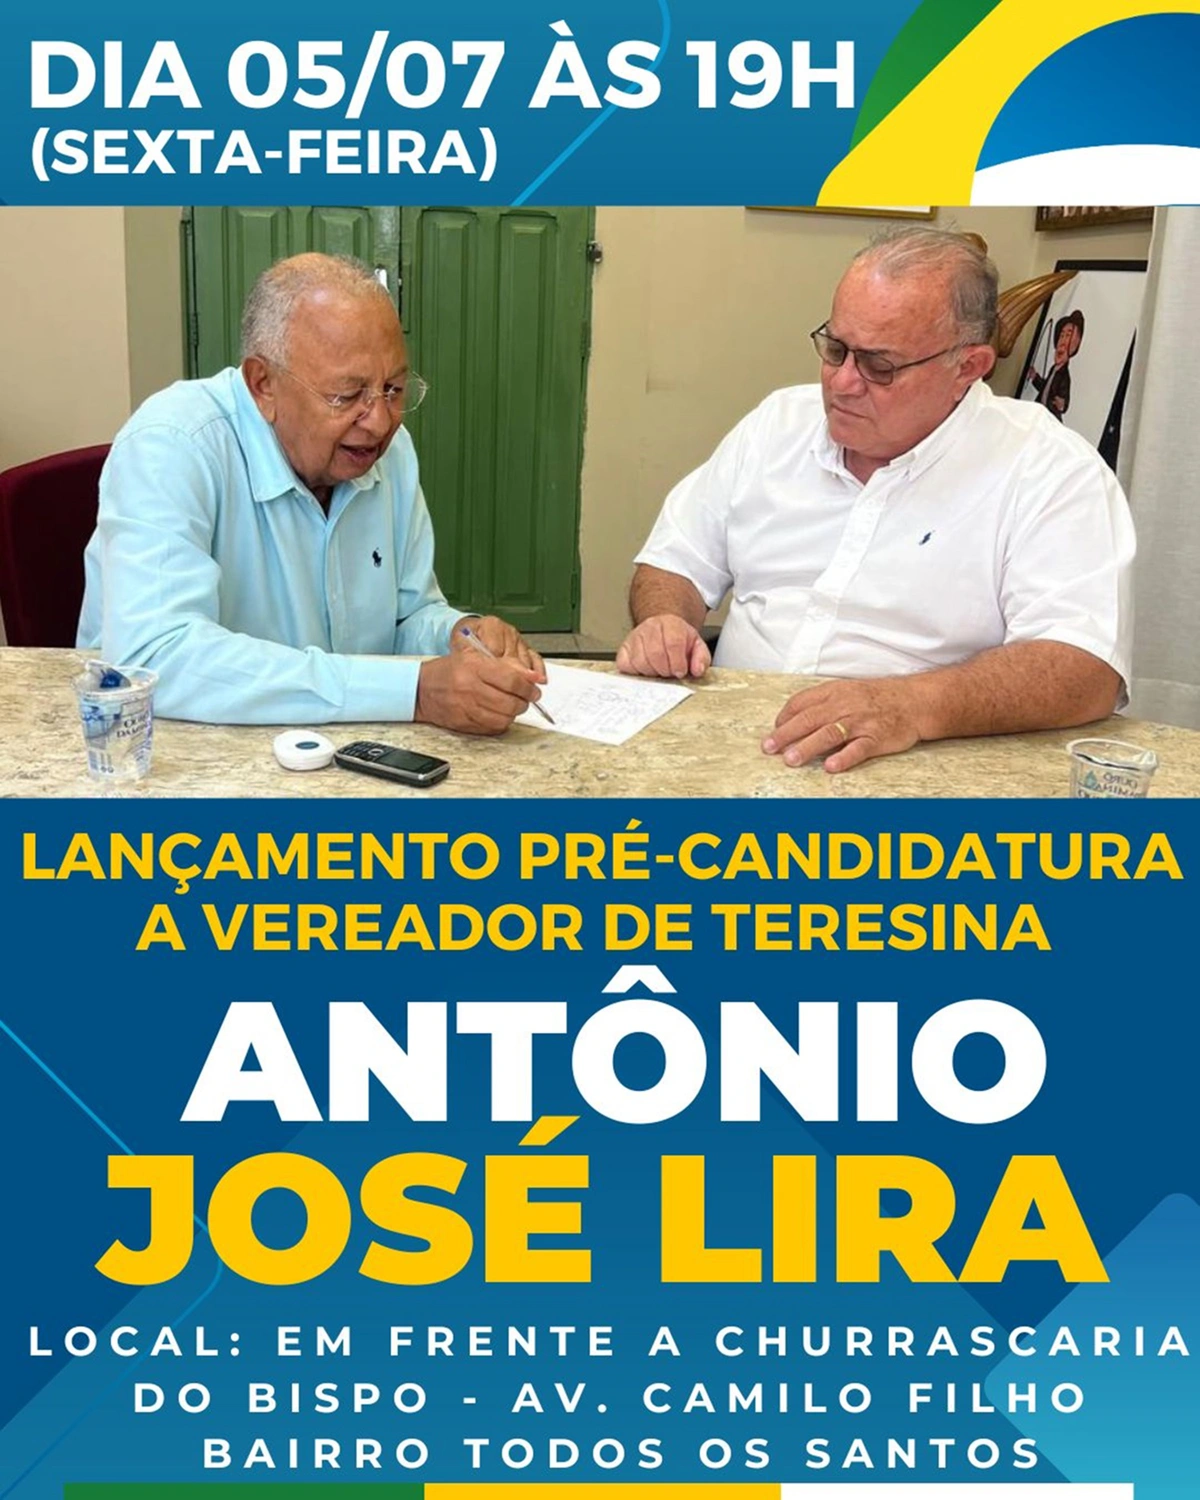 Convite de lançamento da pré-candidatura a vereador de Antônio José Lira